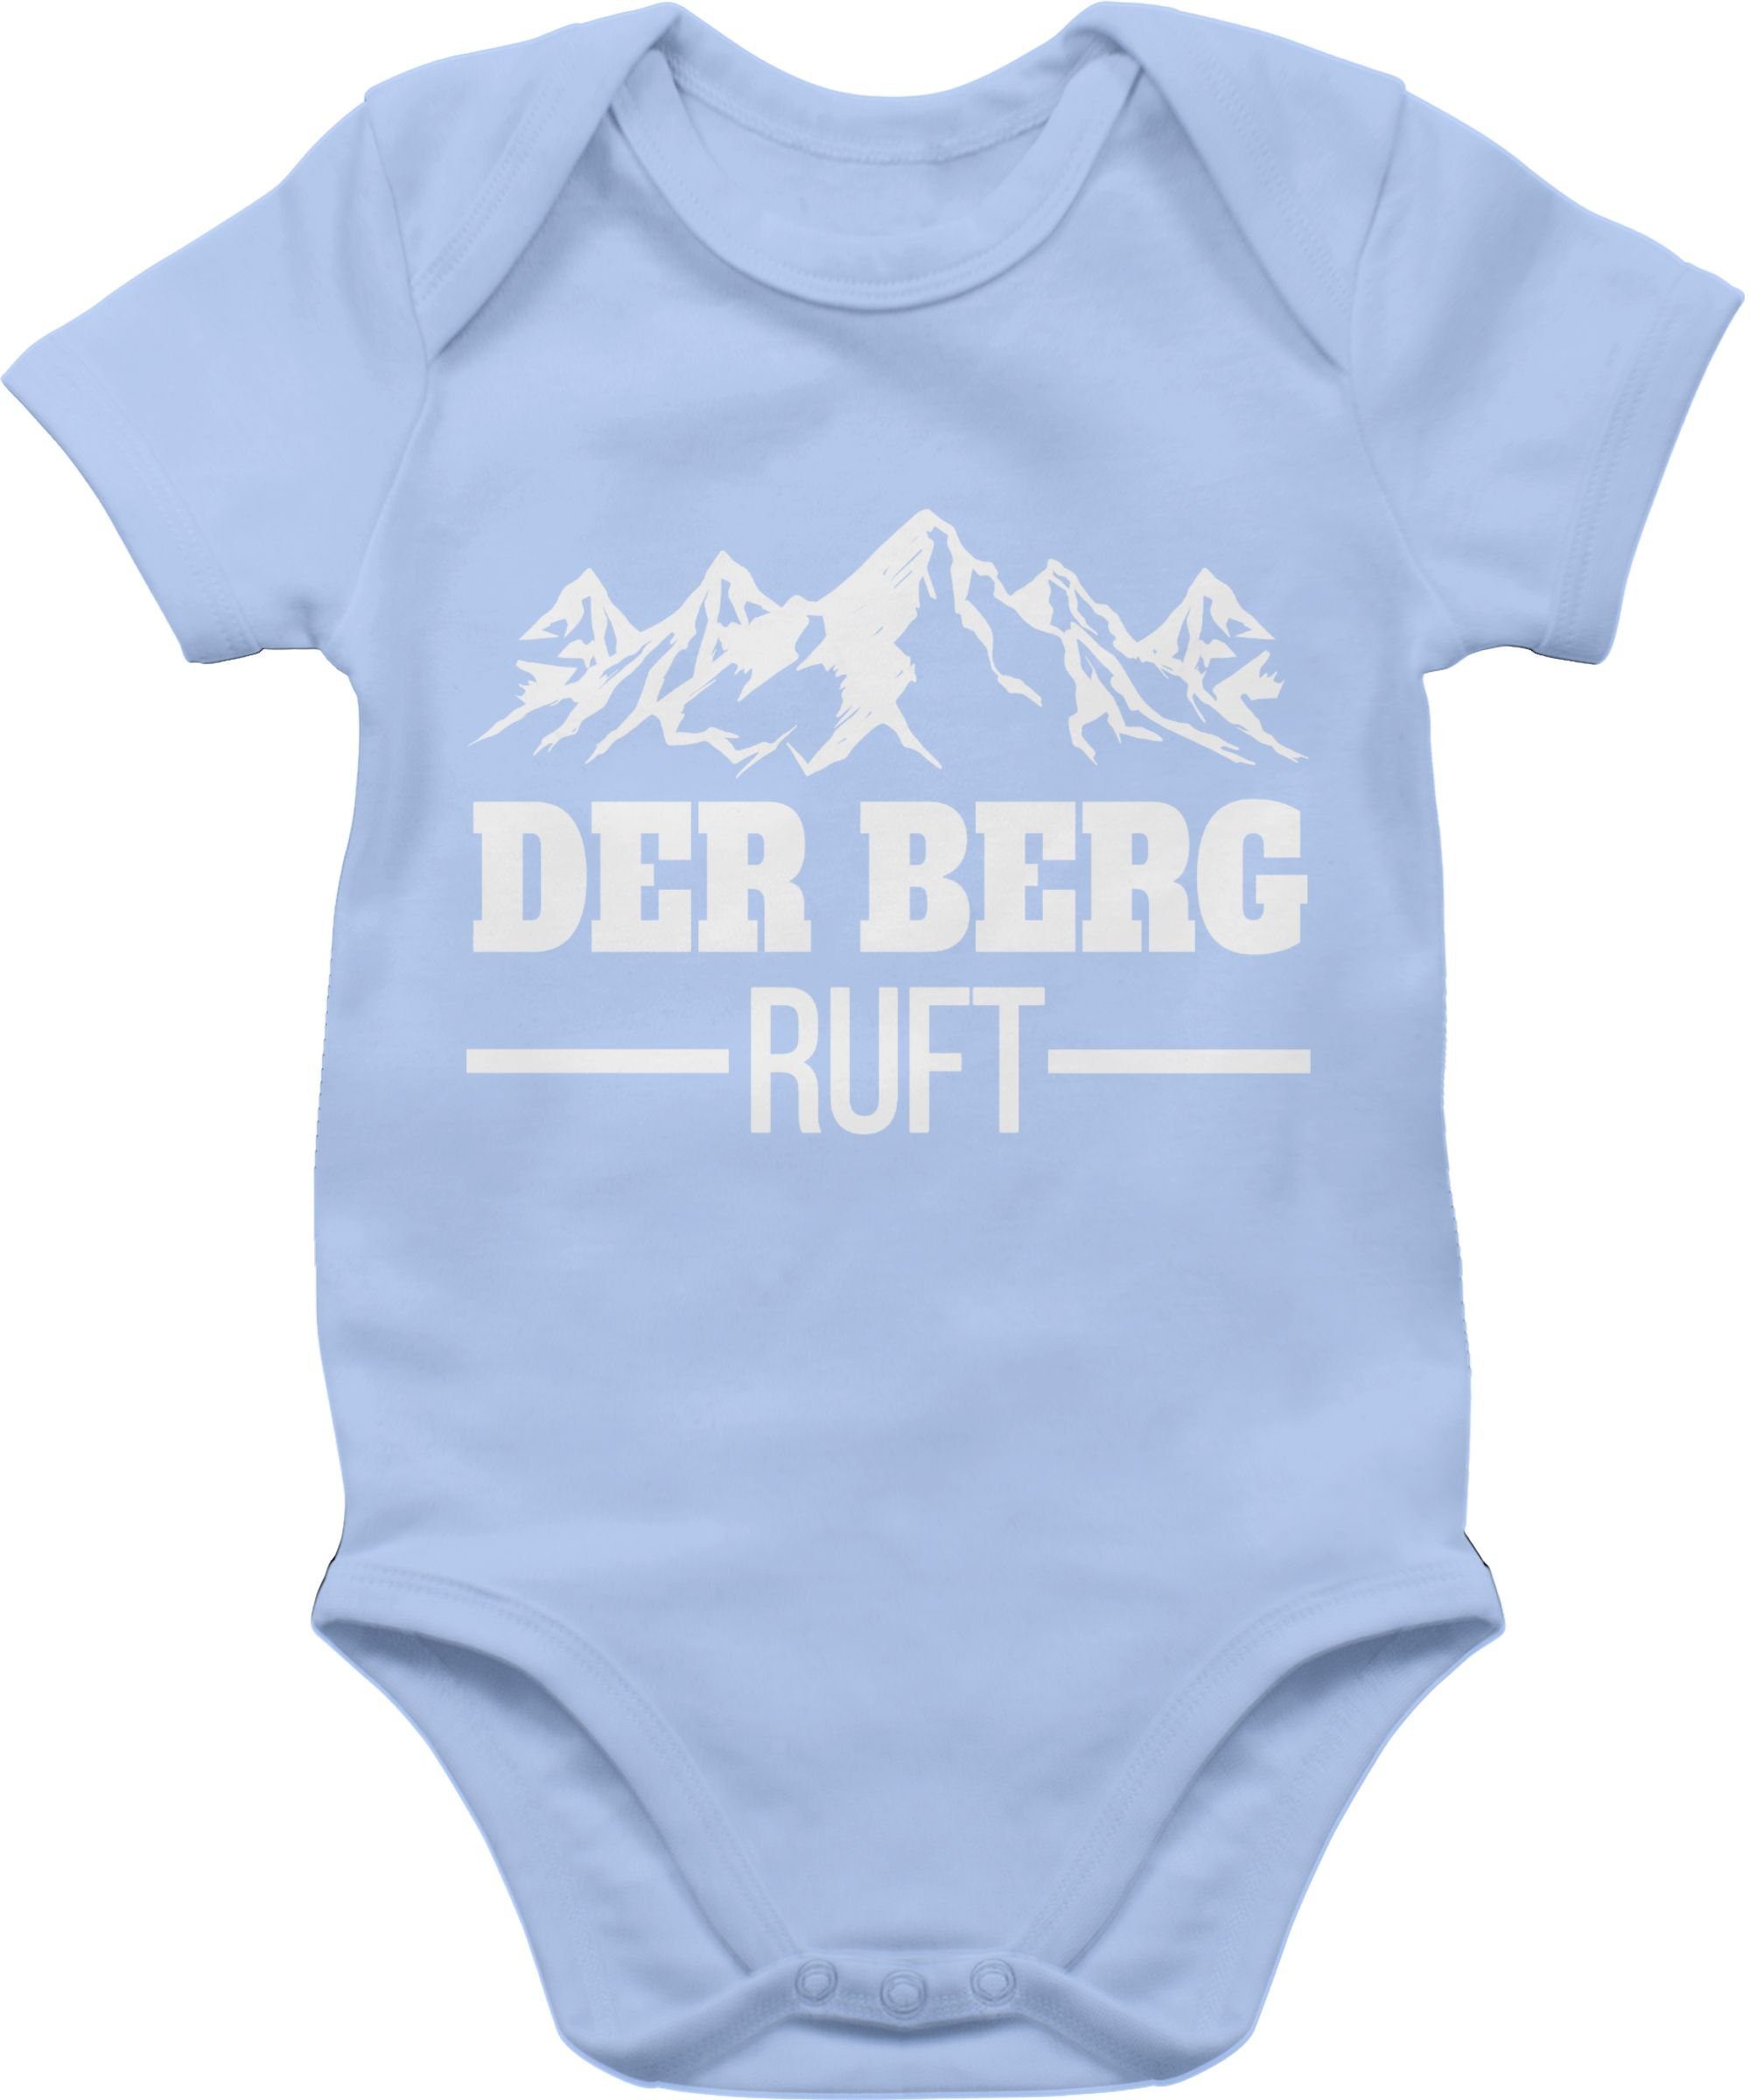 Shirtracer Shirtbody Der Berg ruft Sport & Bewegung Baby 2 Babyblau